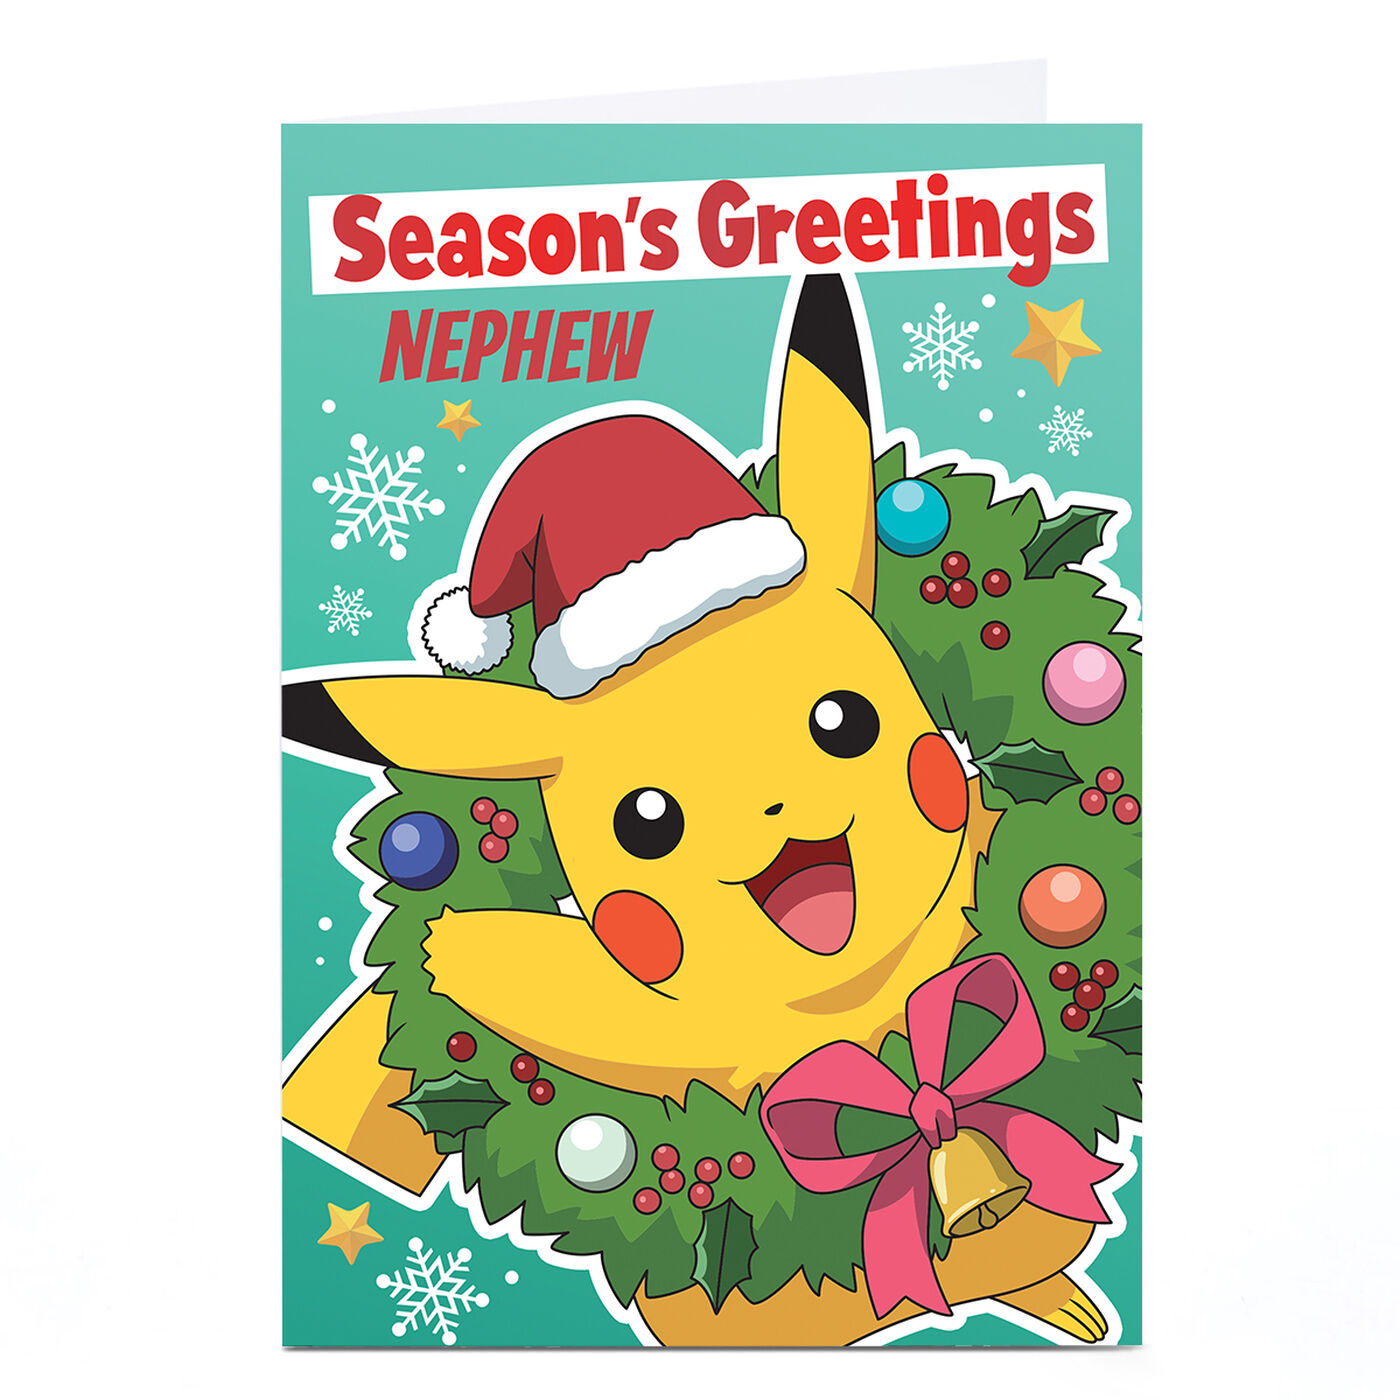  Pokemon Christmas Cards